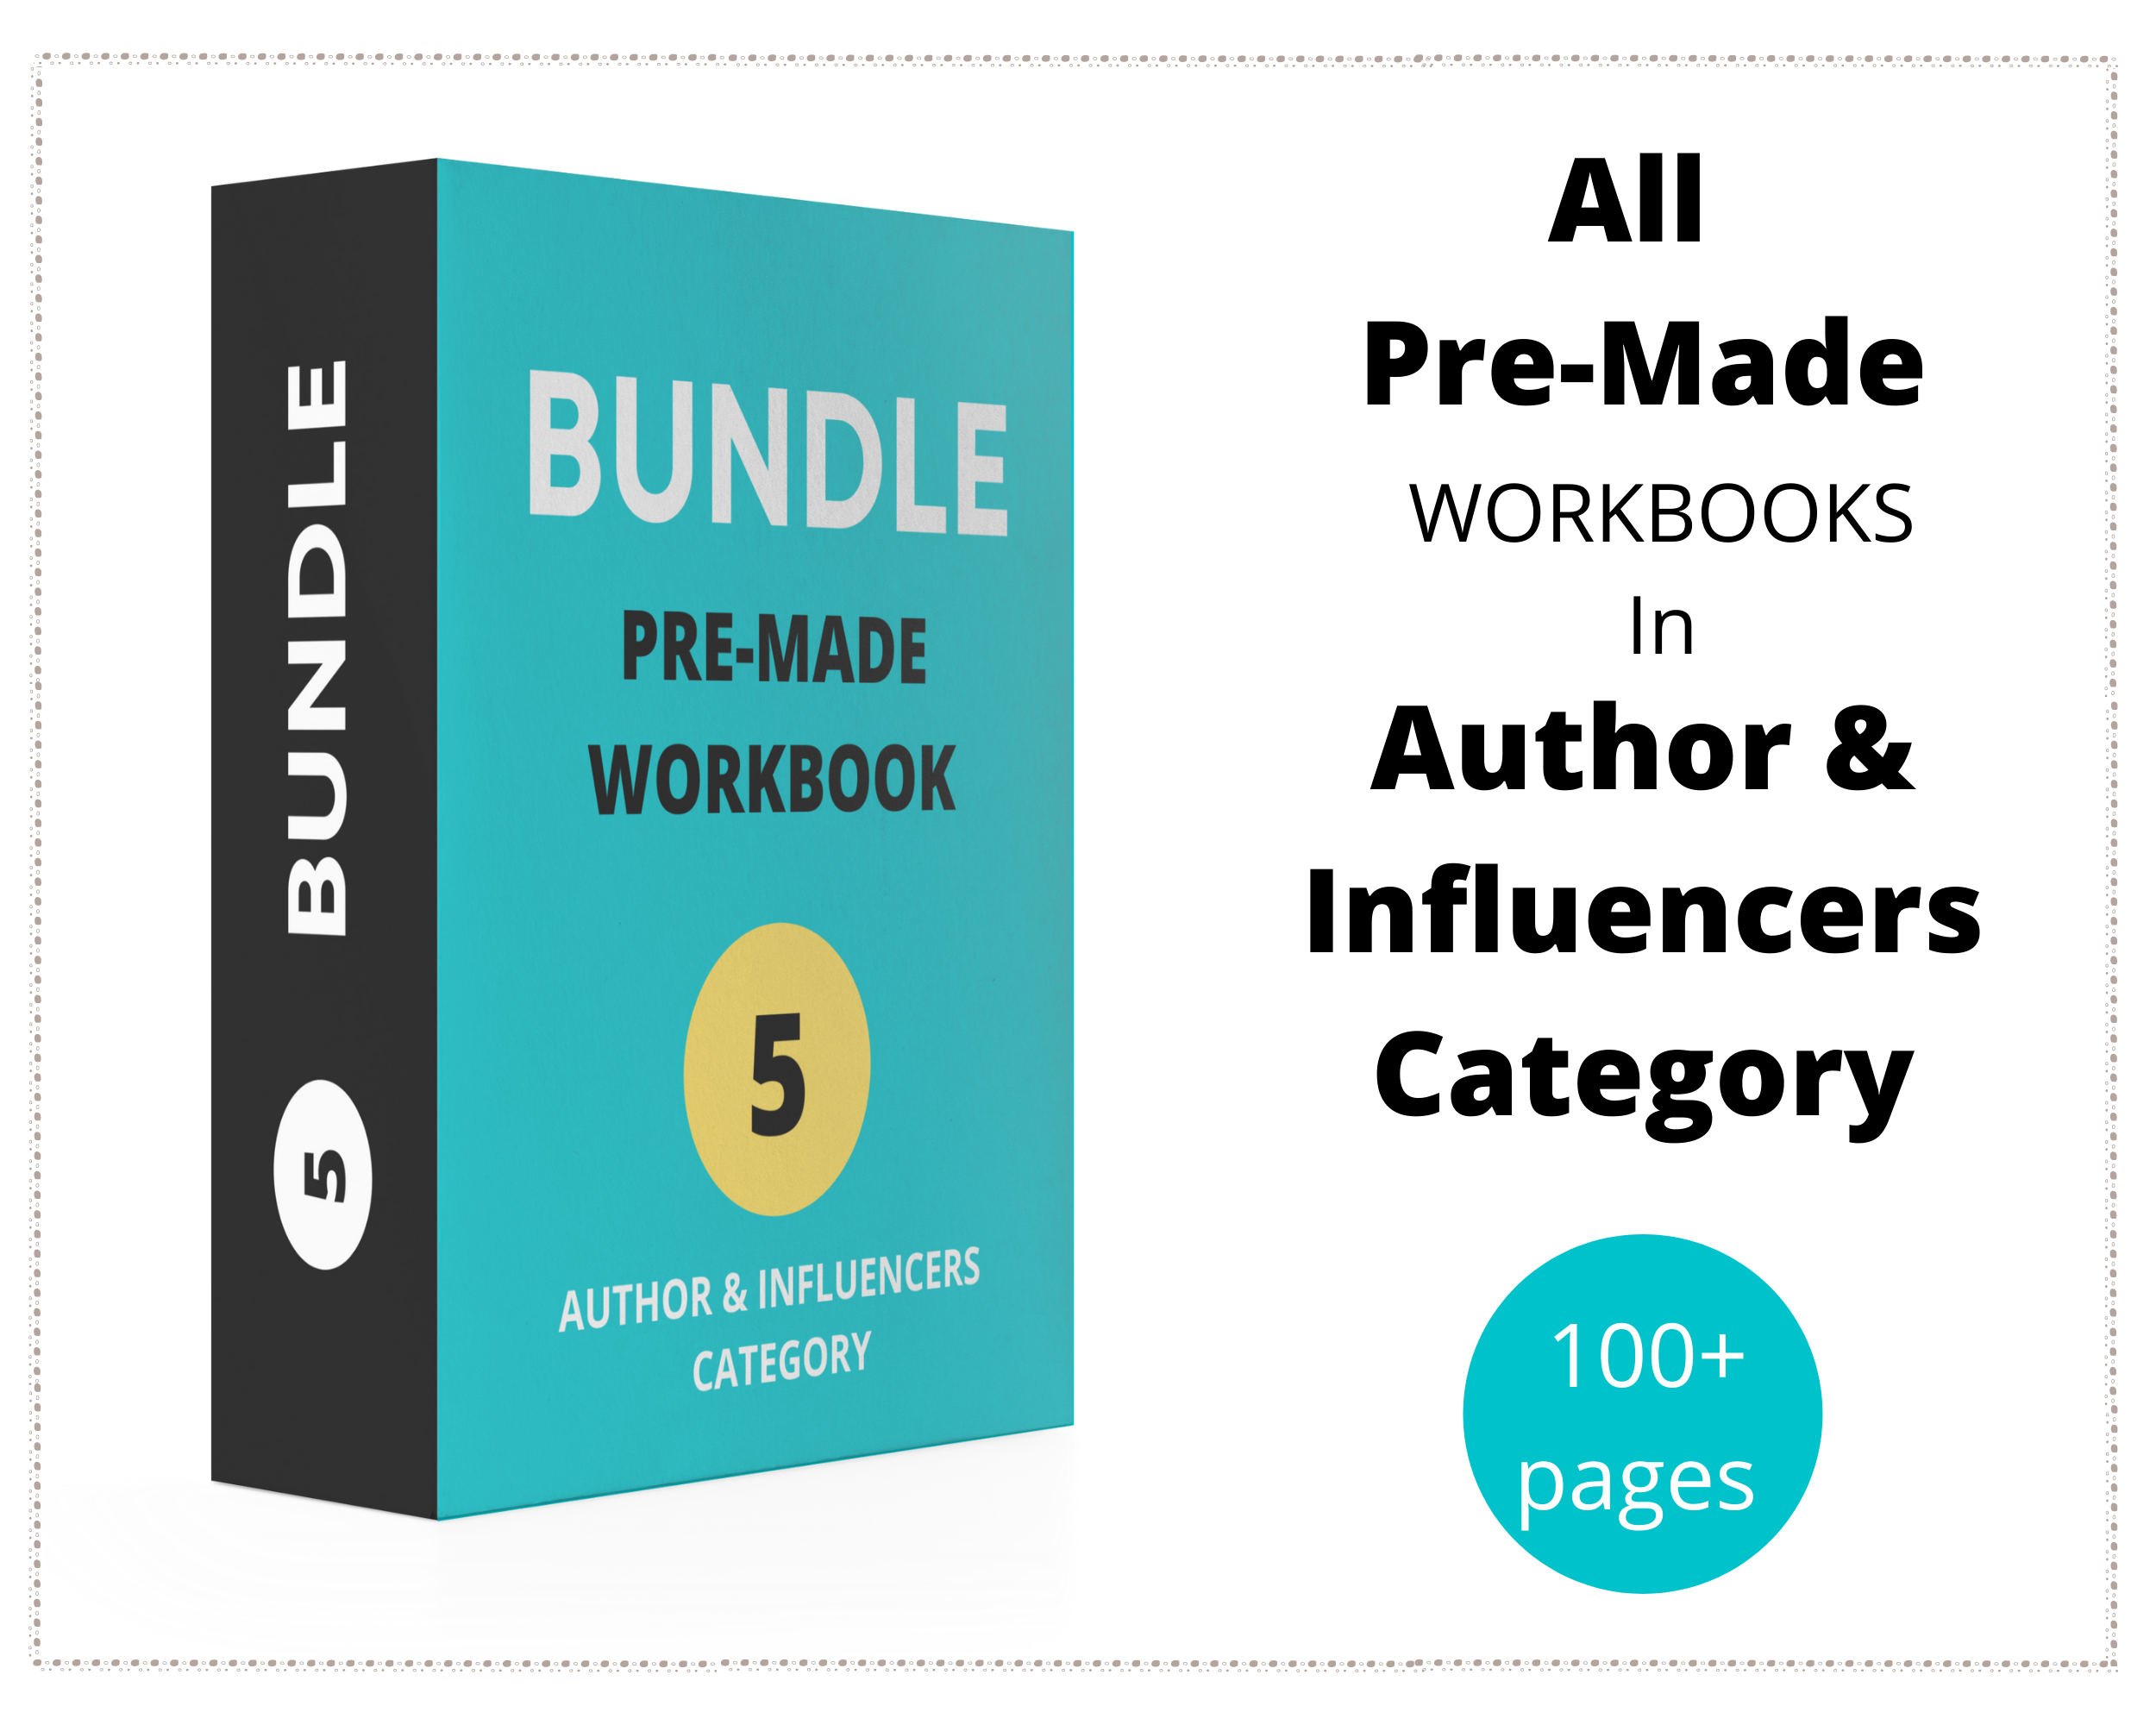 BUNDLE of 7 Authors & Influencers Workbooks | All Access to Everything in Authors & Influencers Workbooks Category | Big Bundle of Workbooks